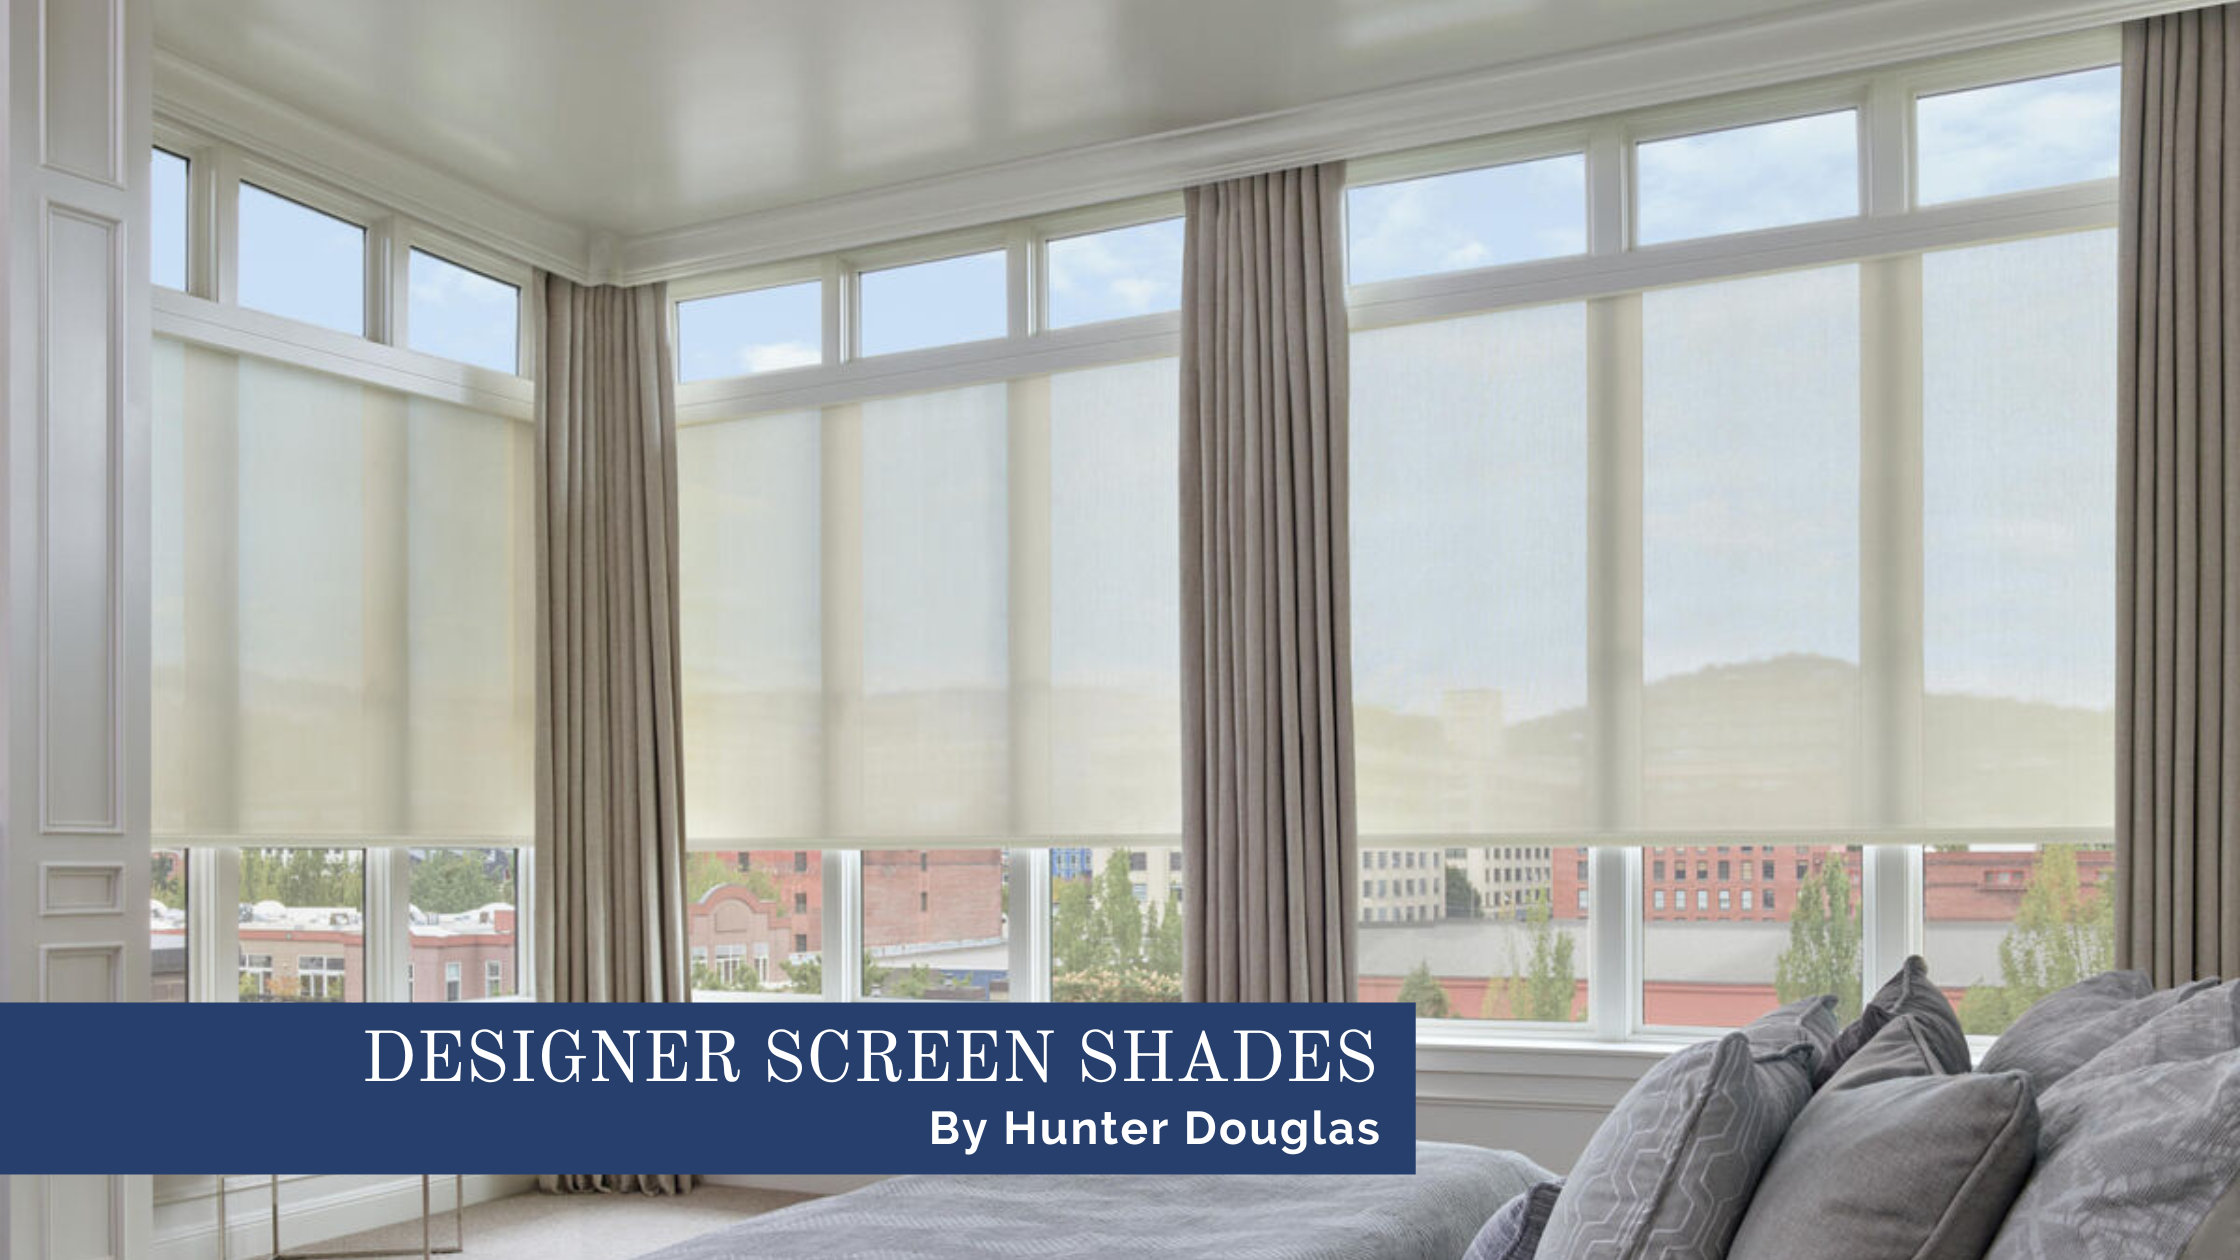 Hunter Douglas Design StudioTM Roller Shades, solar shades from JC Licht near Chicago, Illinois (IL), midwest